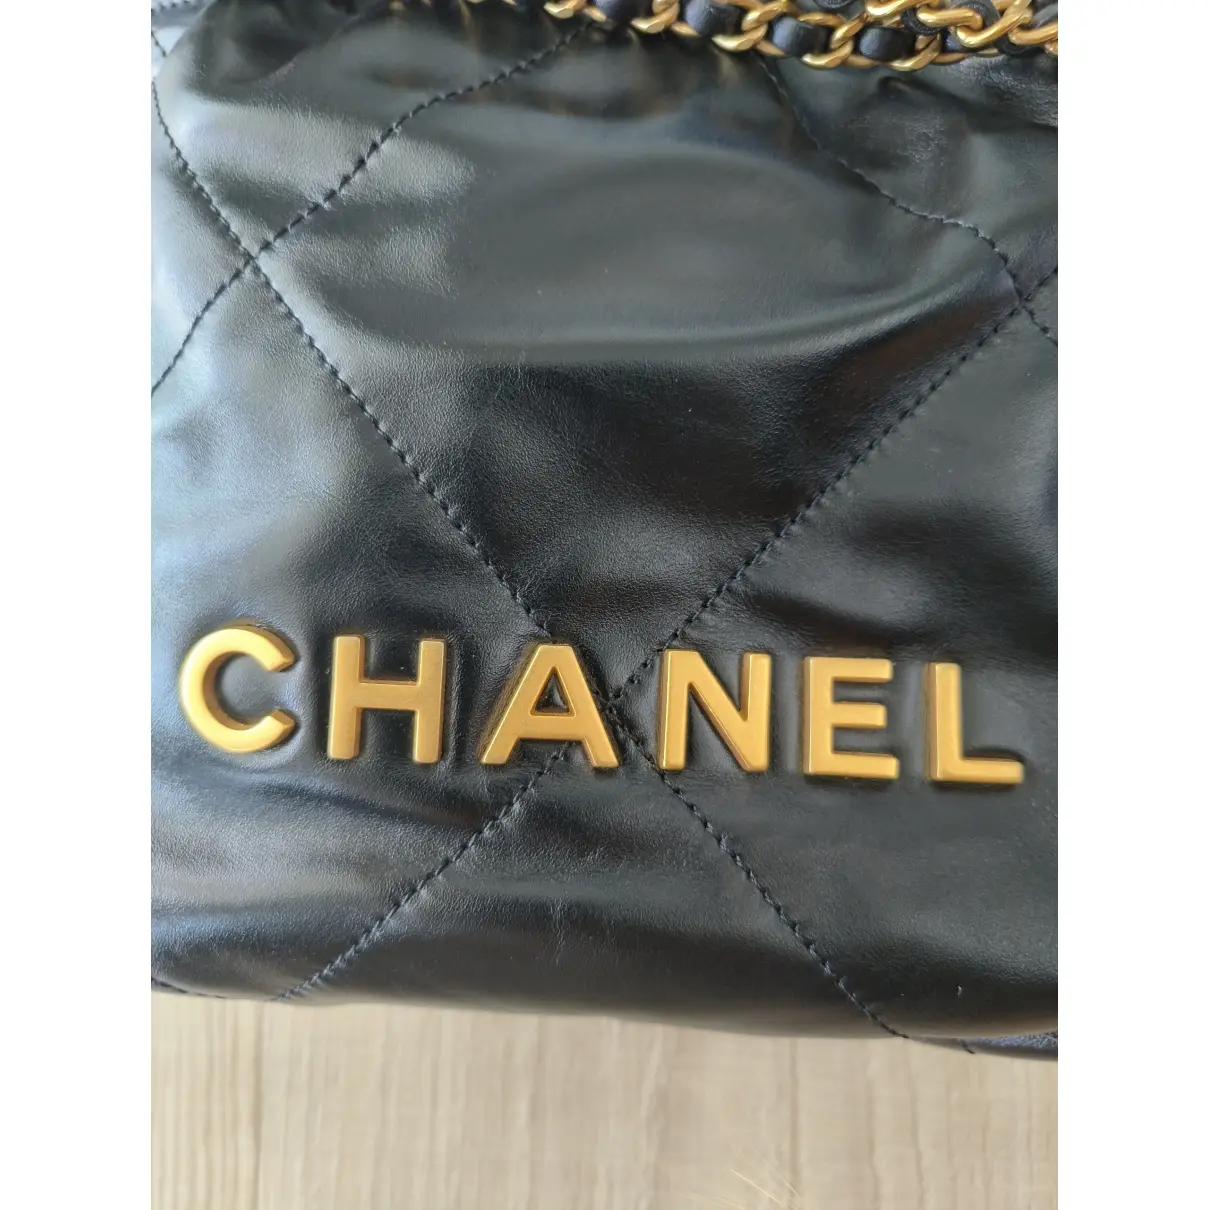 Buy Chanel Chanel 22 leather mini bag online